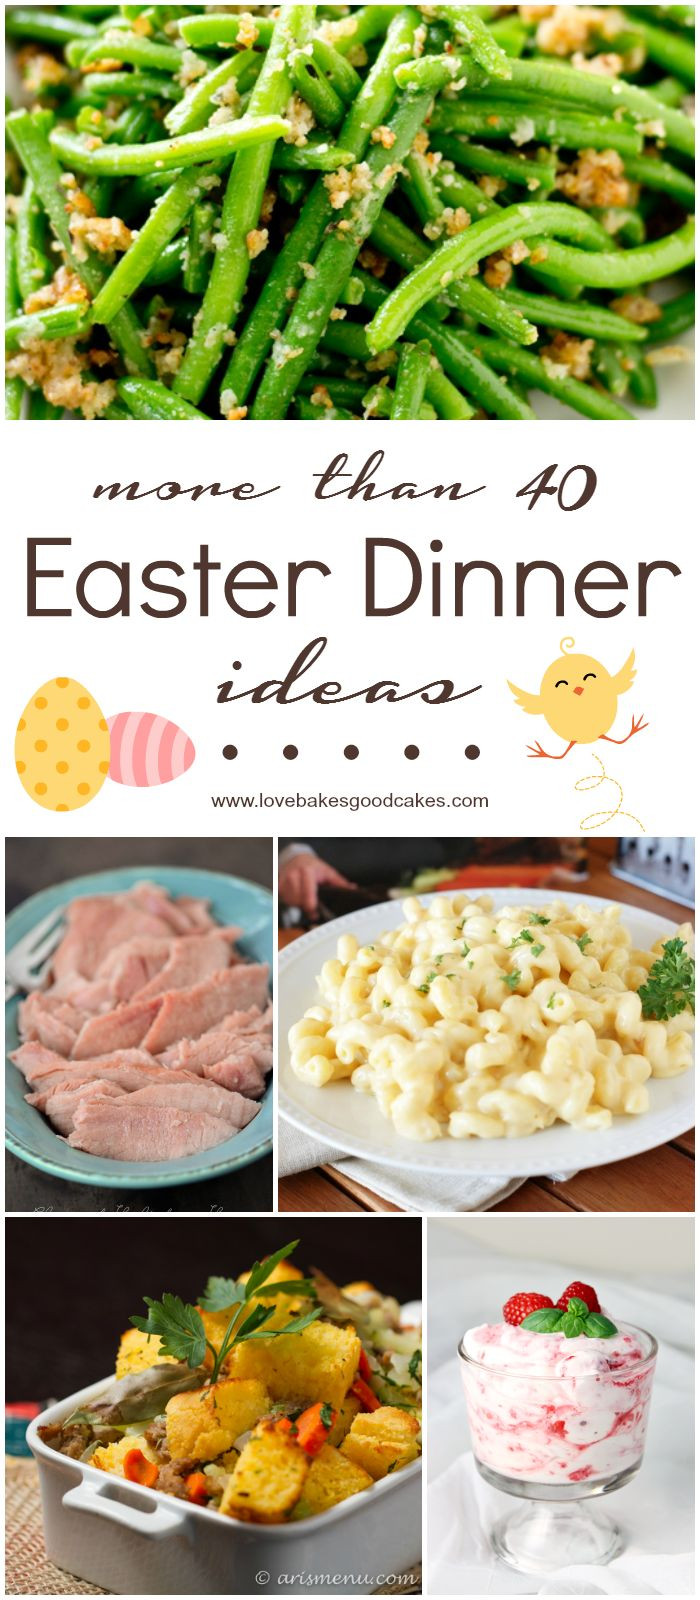 Healthy Easter Dinner Ideas
 Best 25 Easter dinner menu ideas ideas on Pinterest